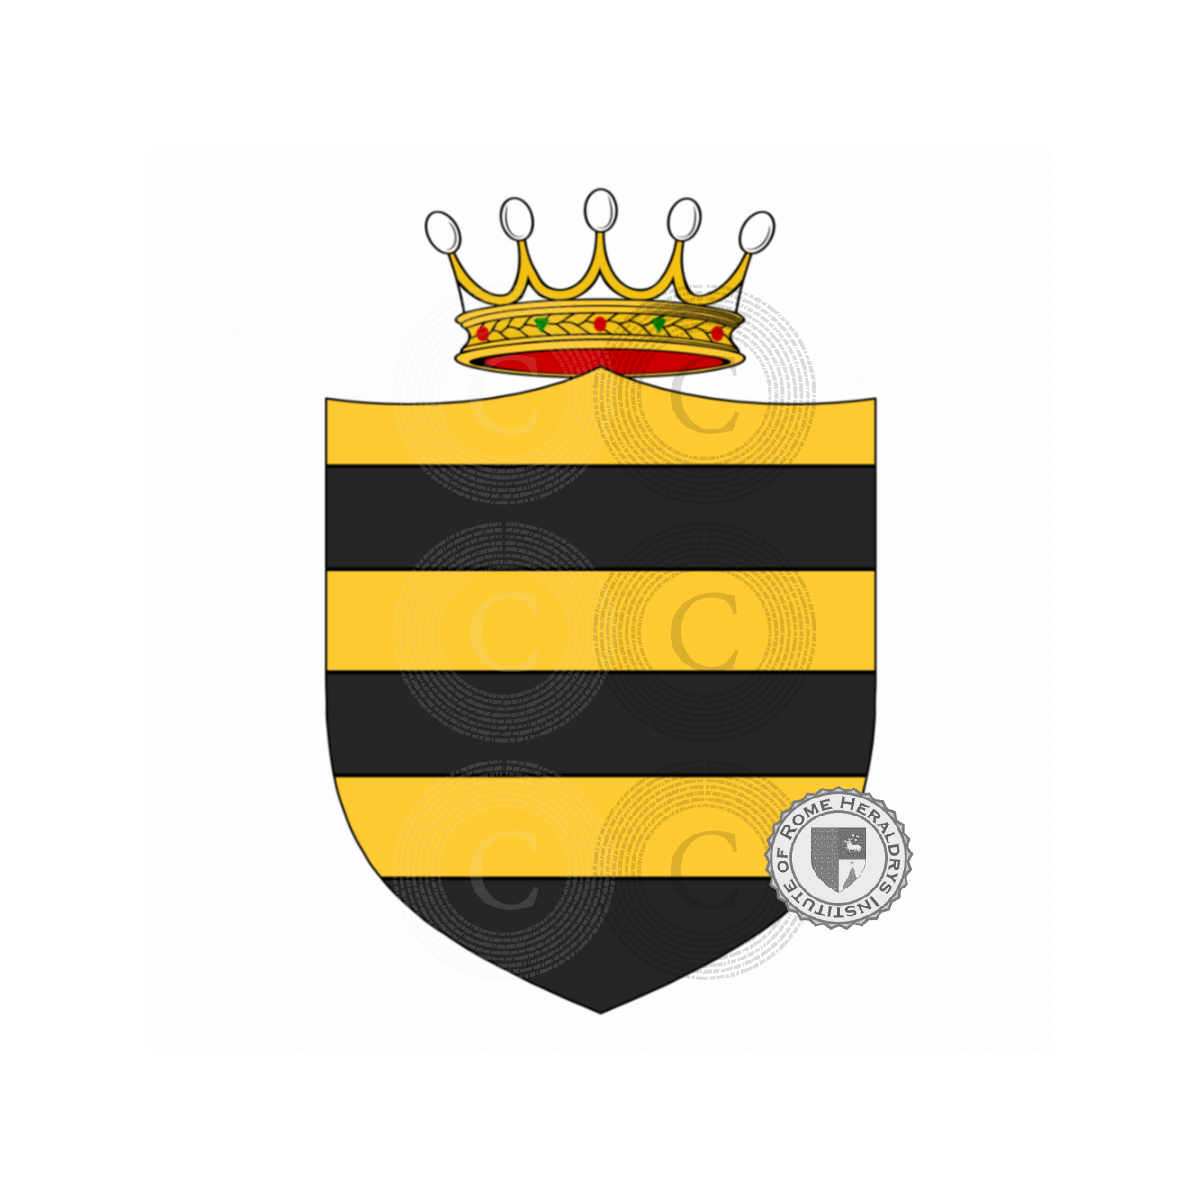 Wappen der FamilieMancini, Bernardino il Mancino,Mancini del Lion Rosso,Mancini di Lorenzo,Mancino